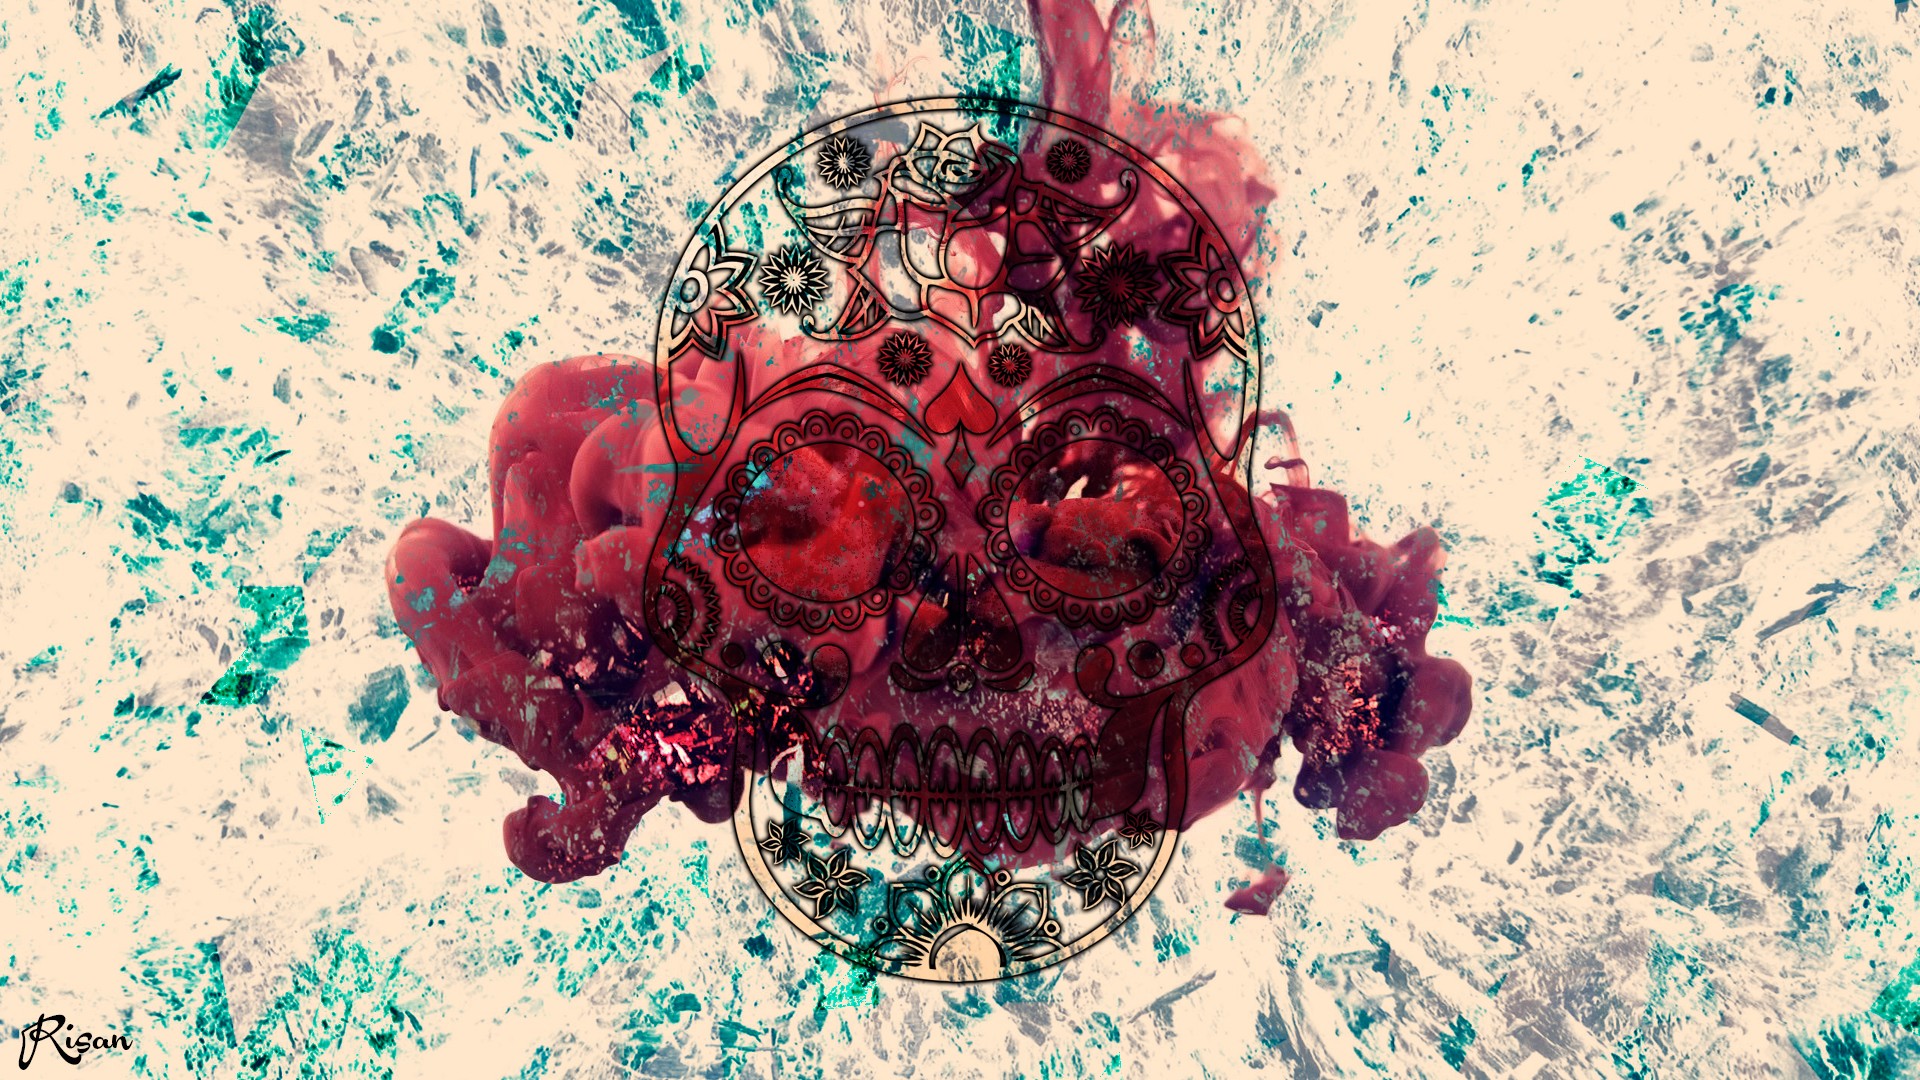 General 1920x1080 skull abstract smoke texture YouTube Electro dubstep digital art